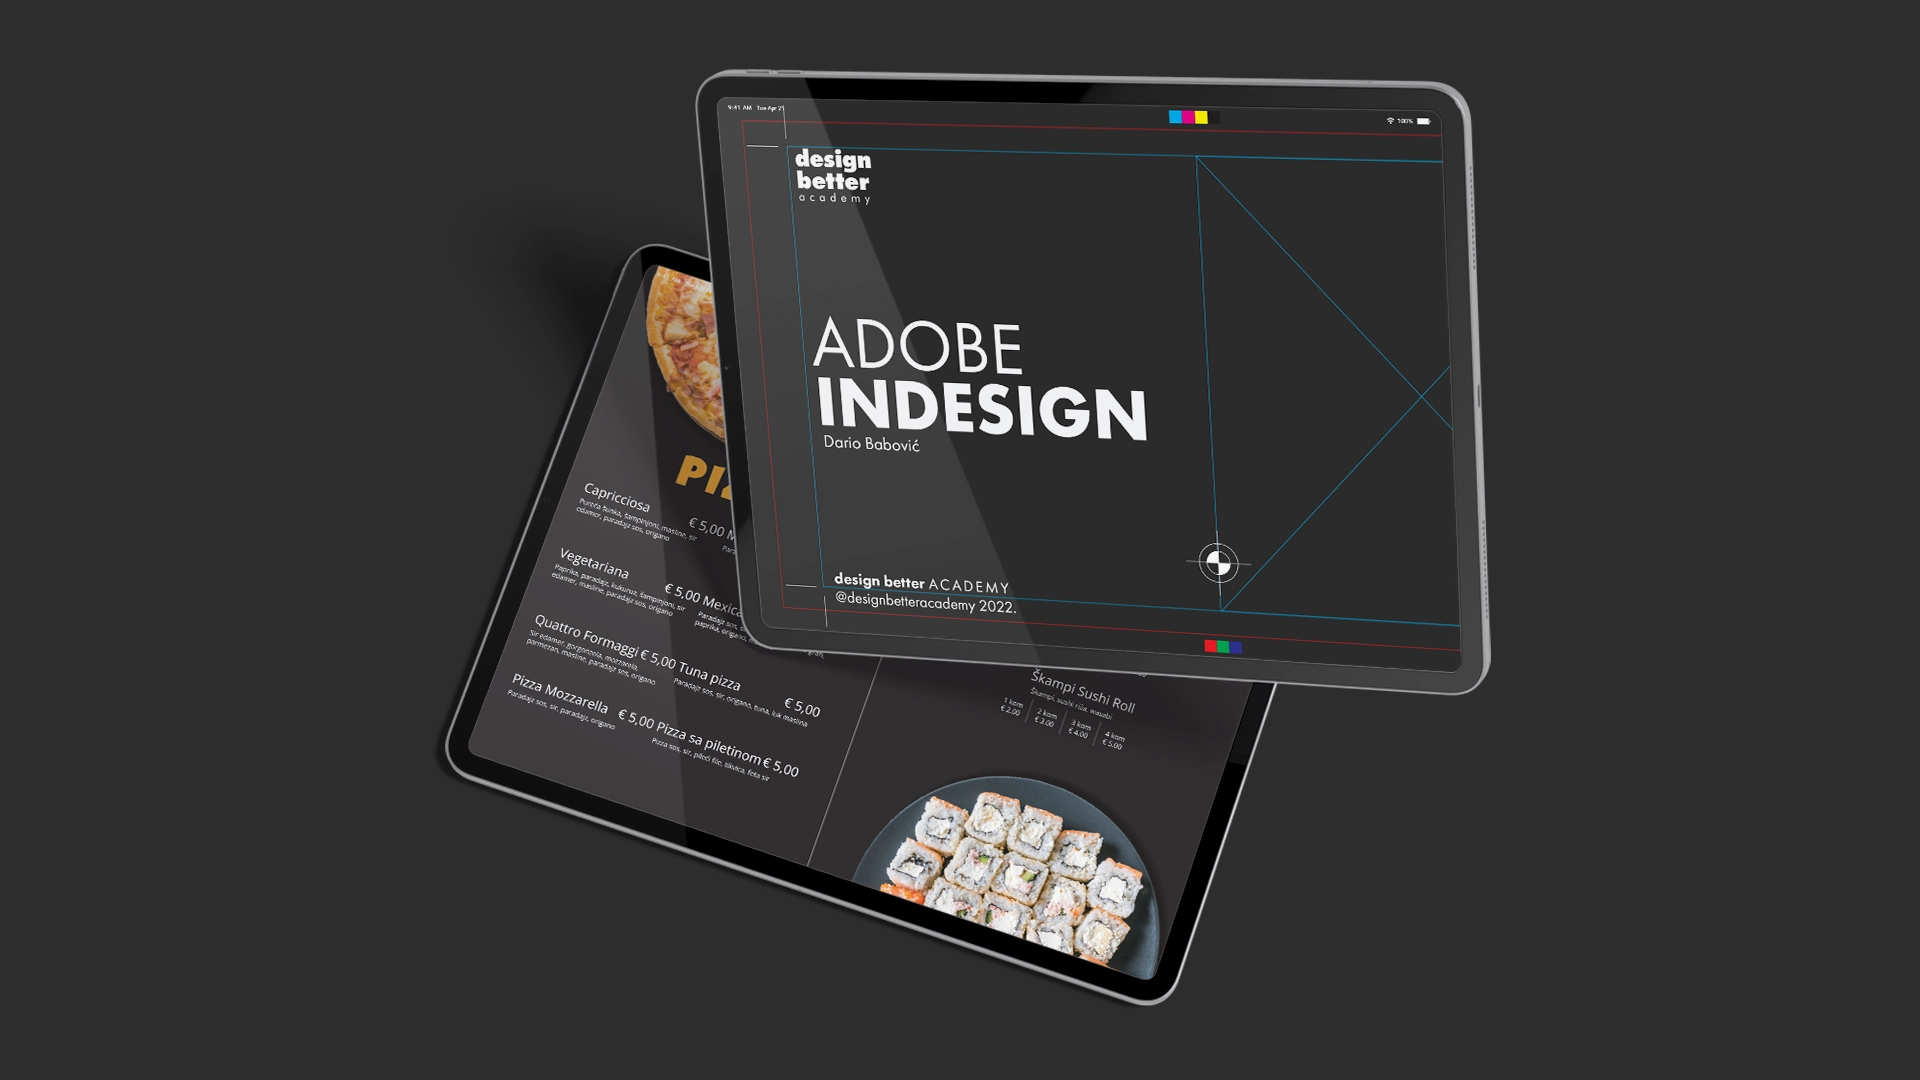 Adobe InDesign i štampa